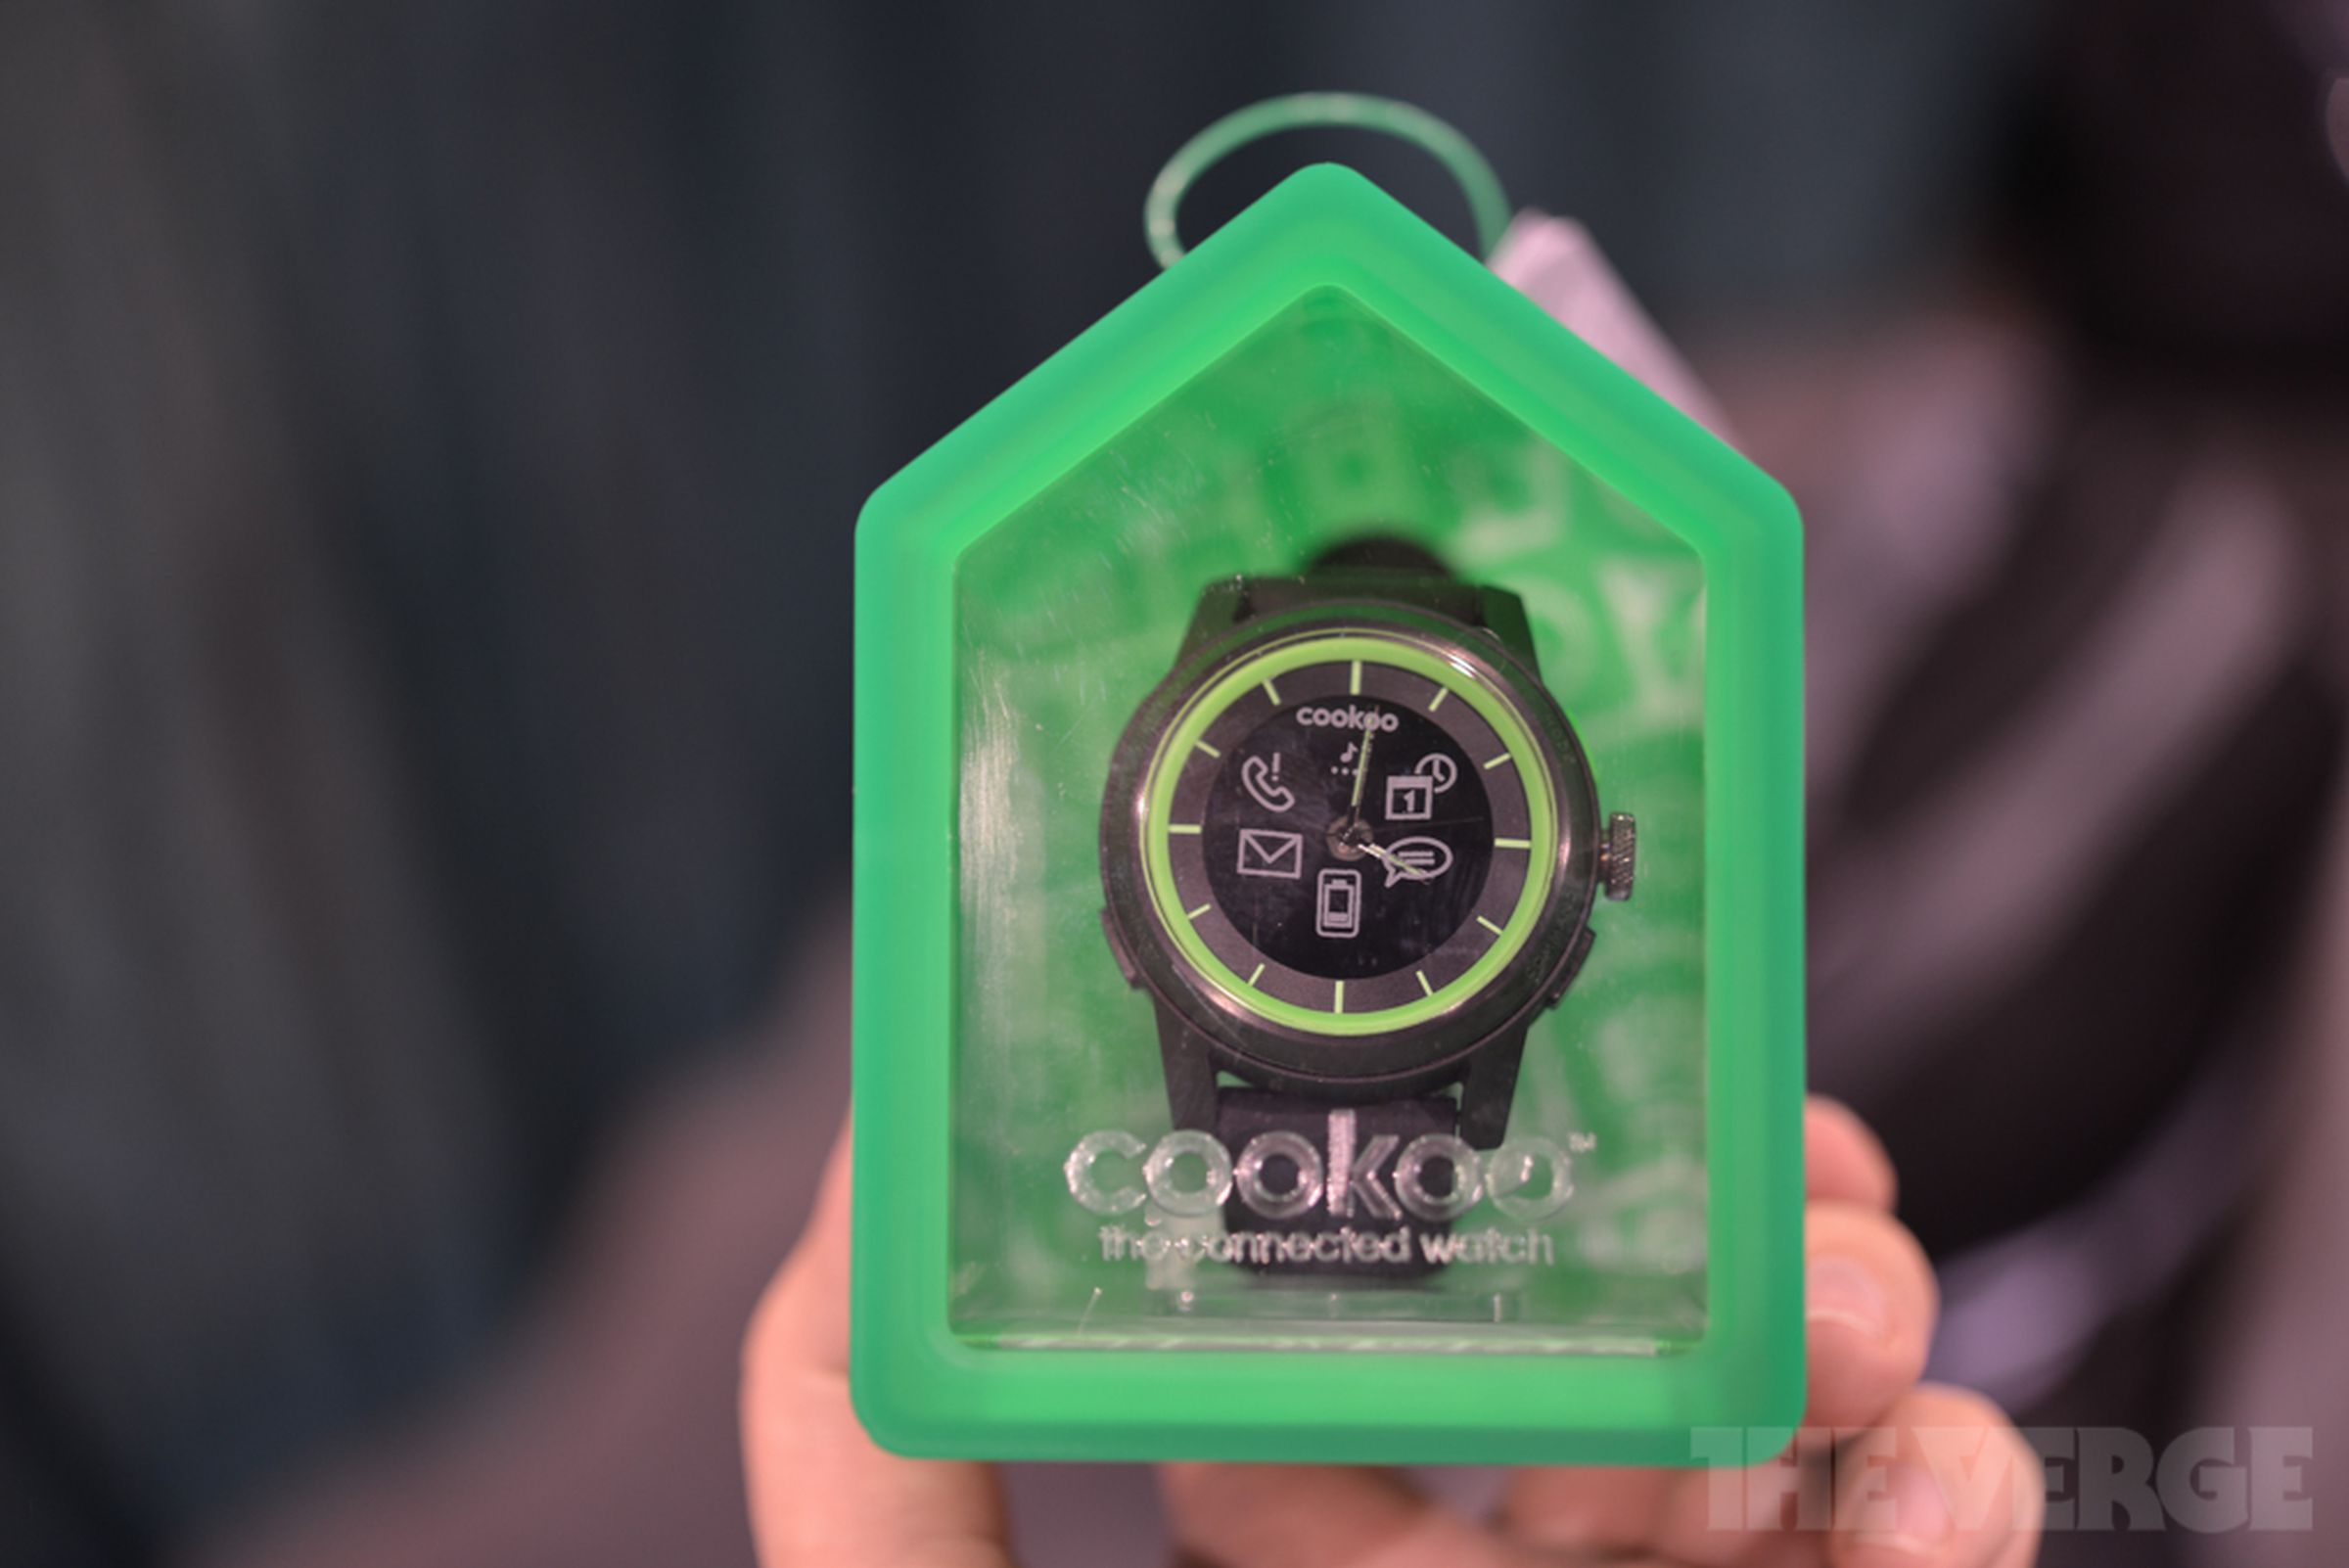 Cookoo smartwatch hands-on pictures